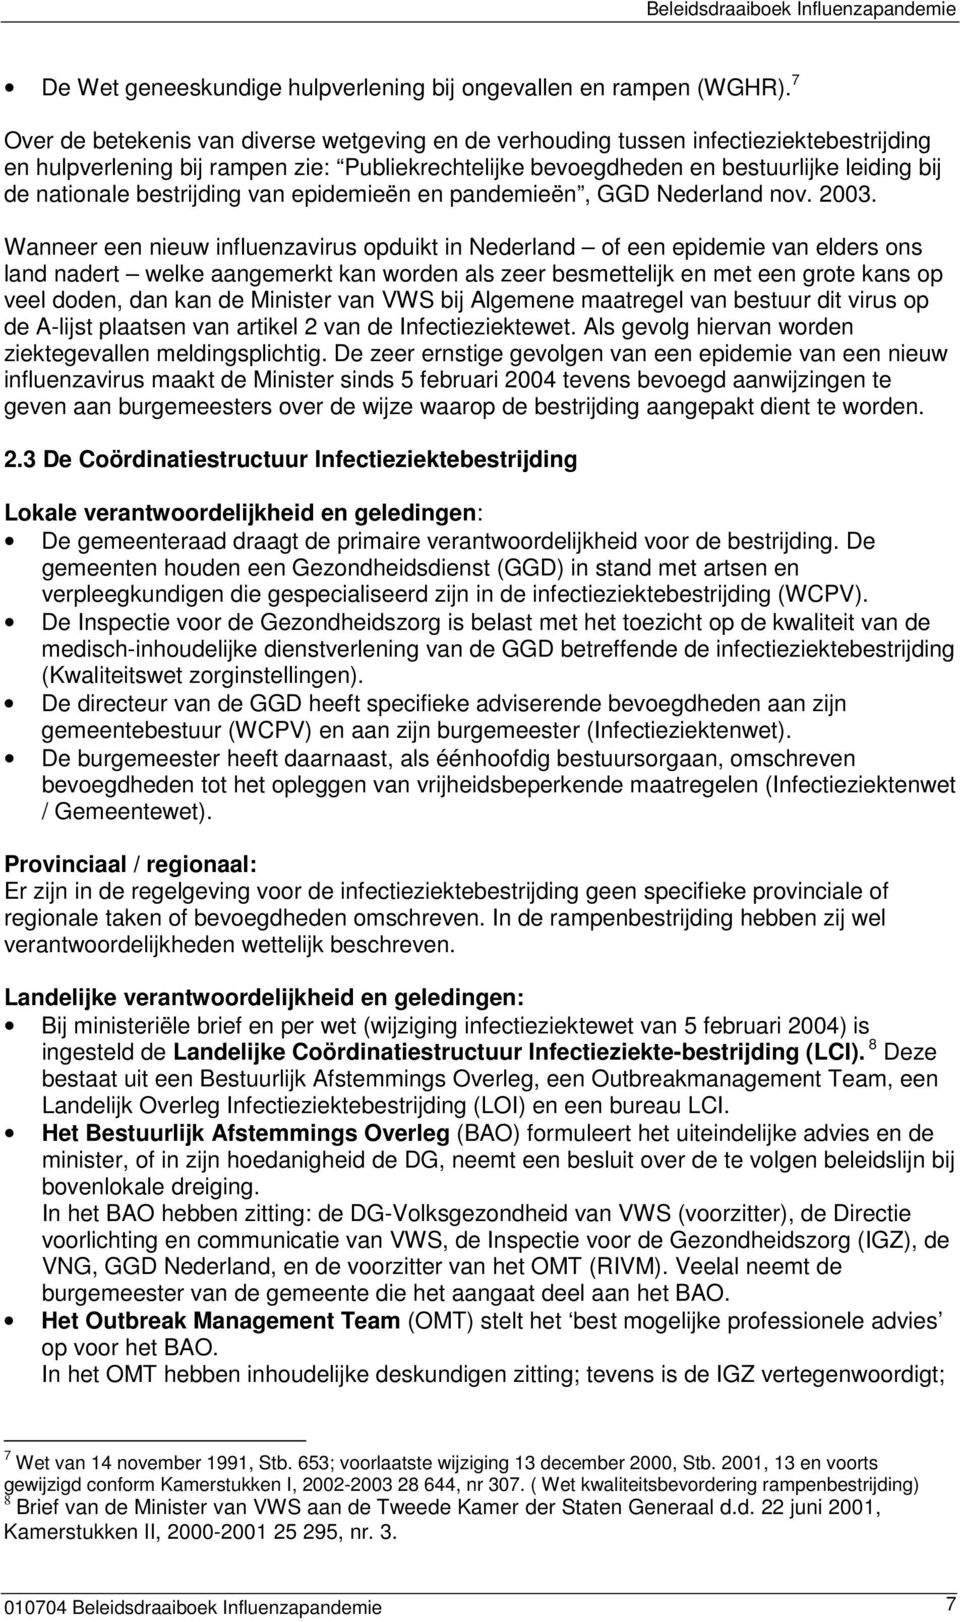 bestrijding van epidemieën en pandemieën, GGD Nederland nov. 2003.